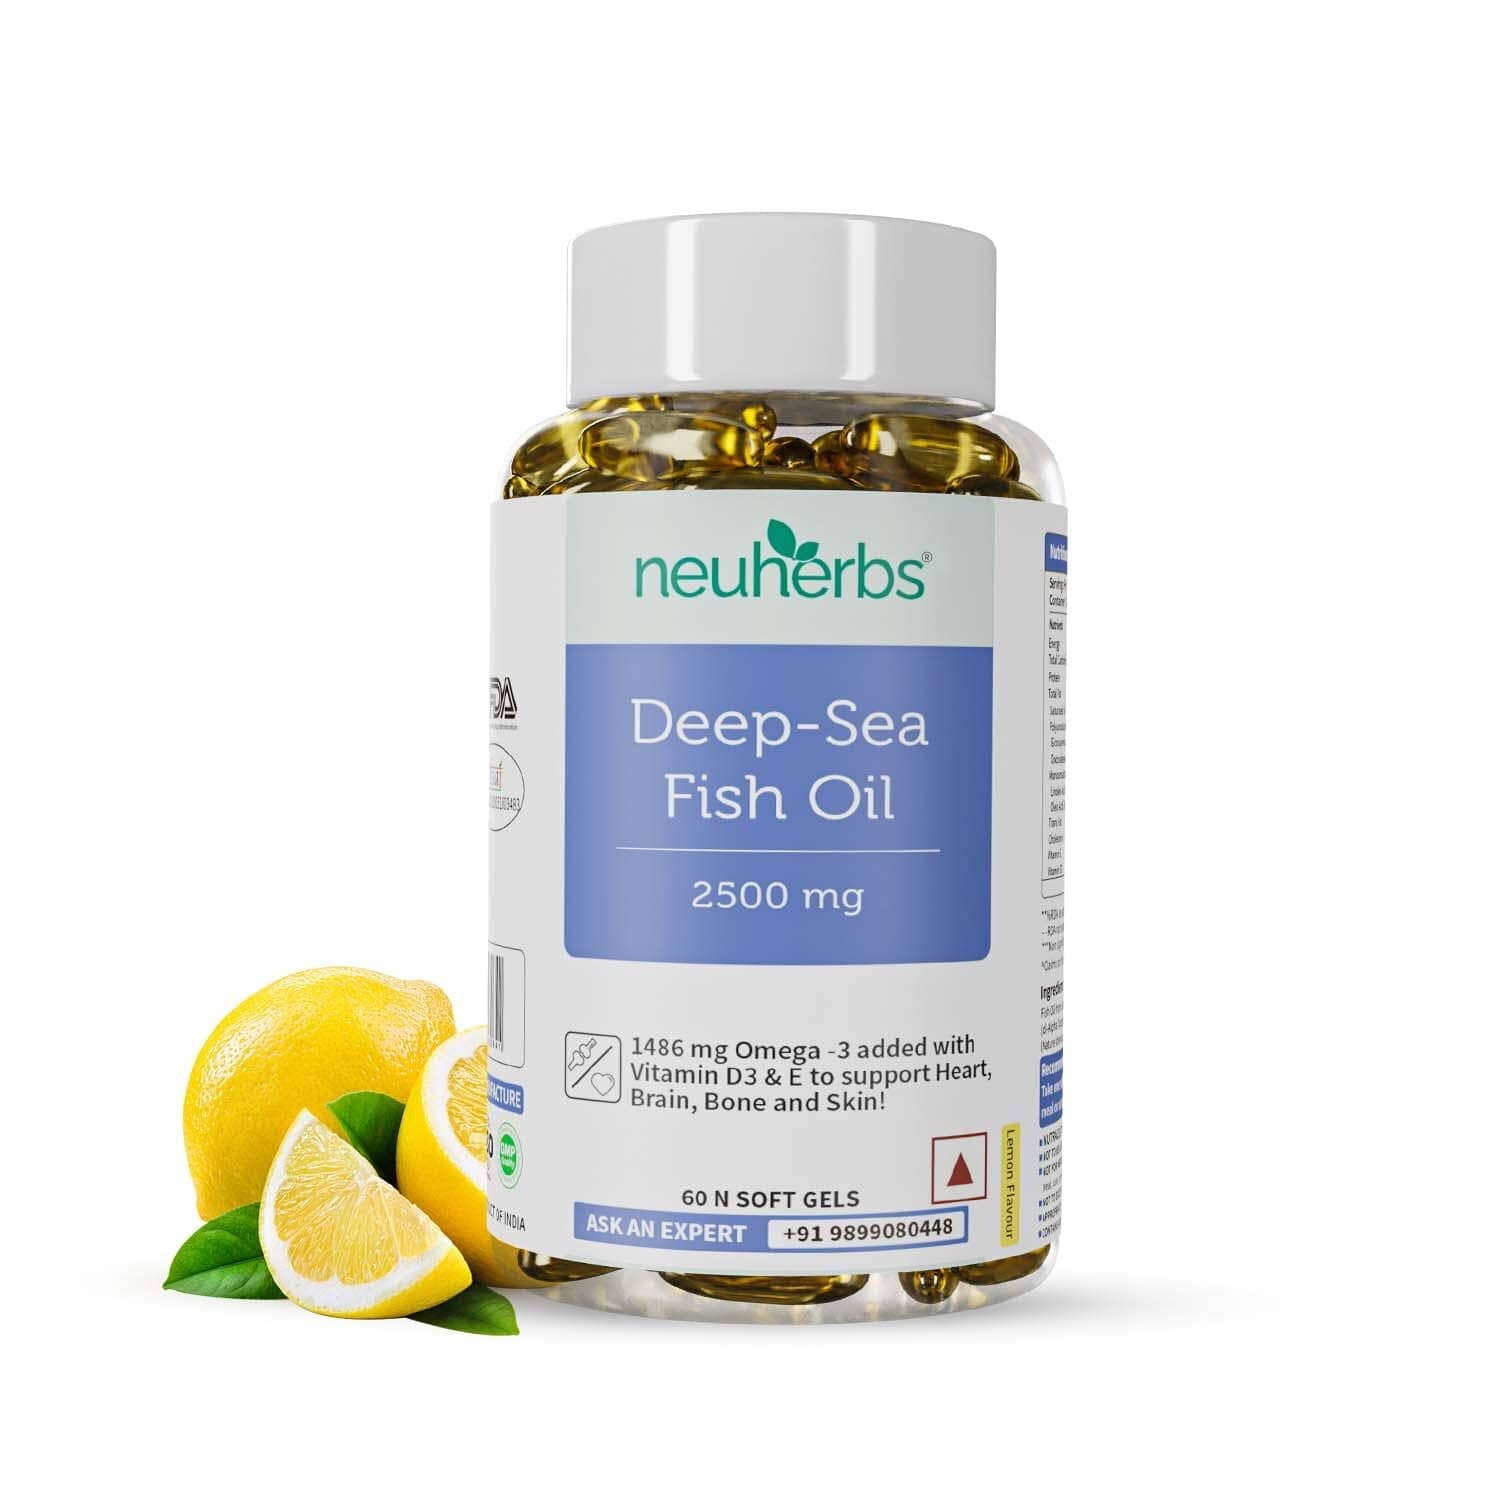 Neuherbs Deep Sea Omega 3 Fish Oil 2500mg – 60 Softgels